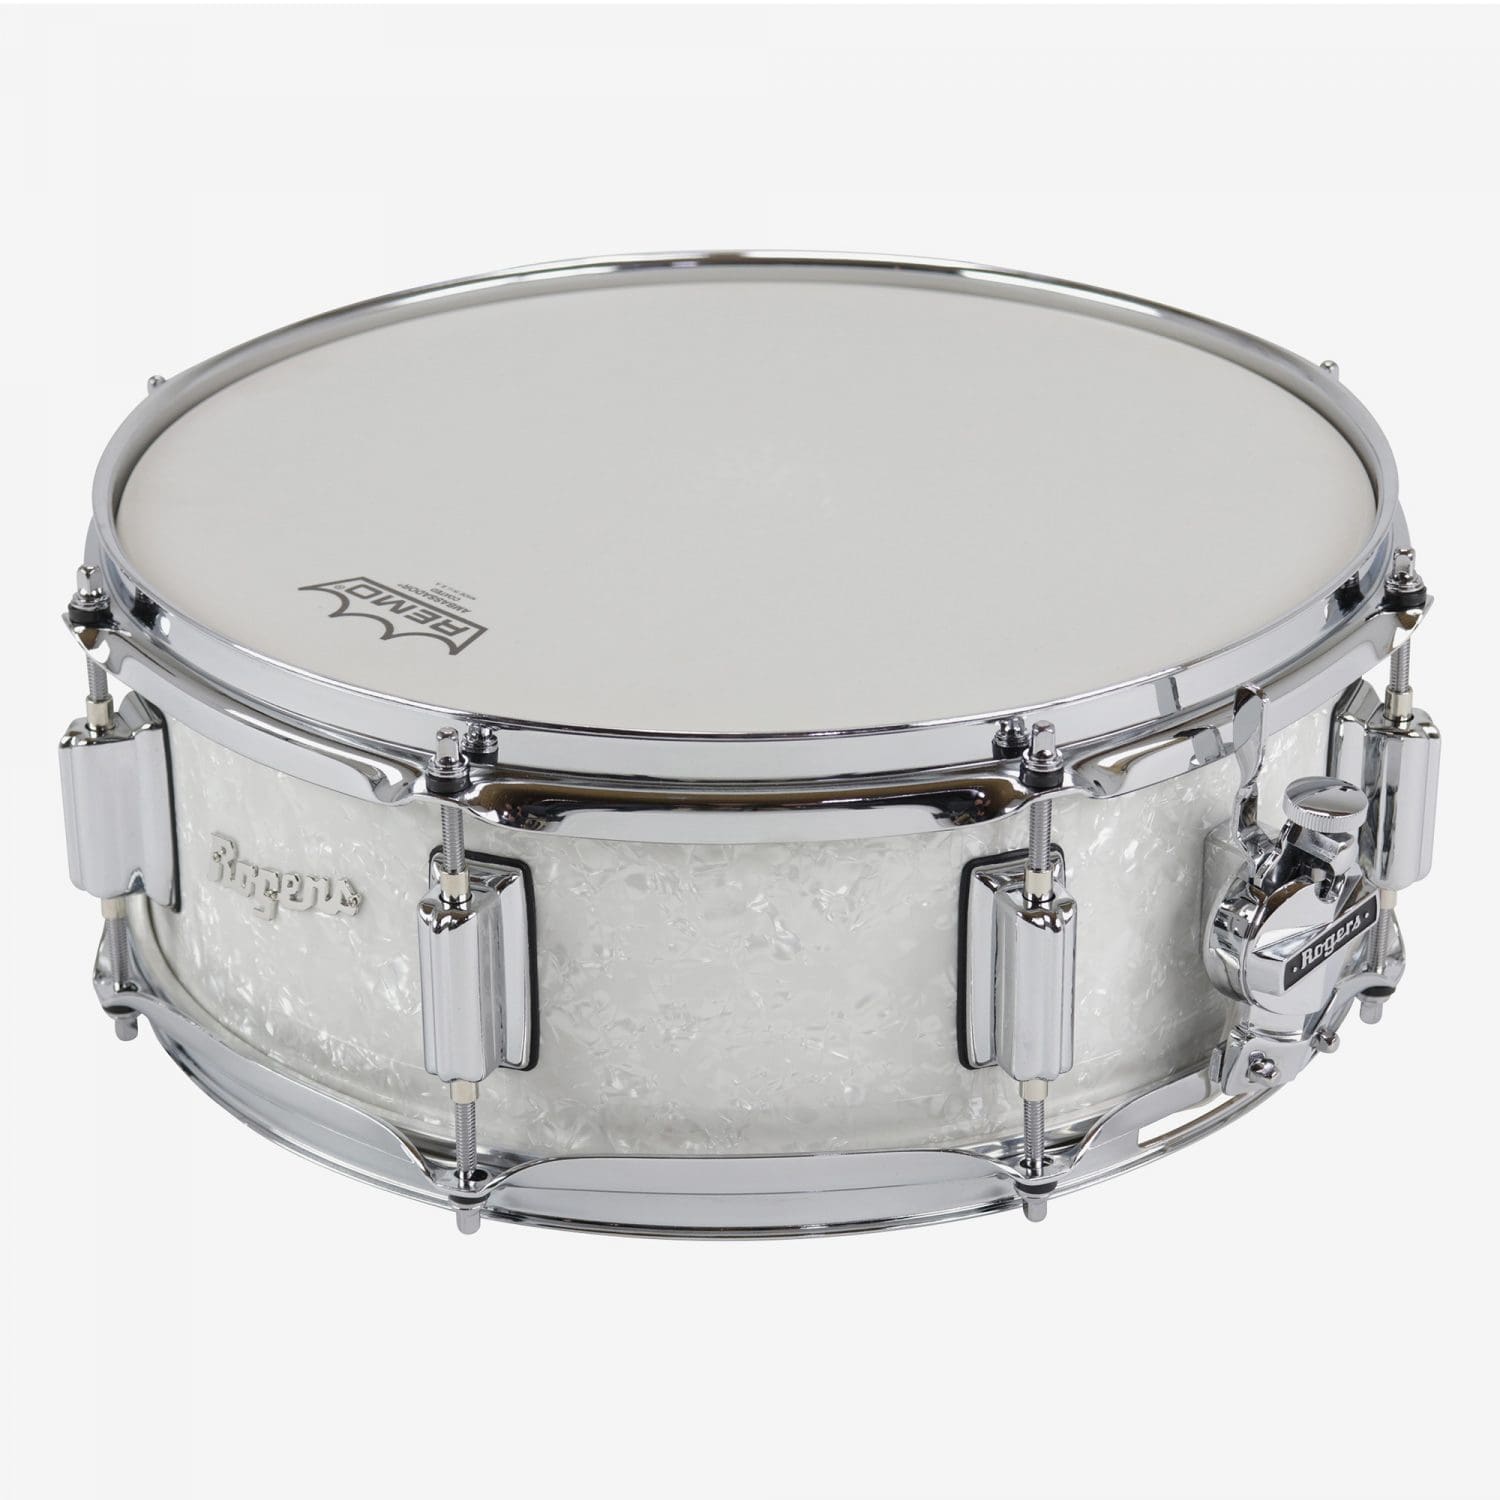 White Marine Pearl PowerTone Snare Drum